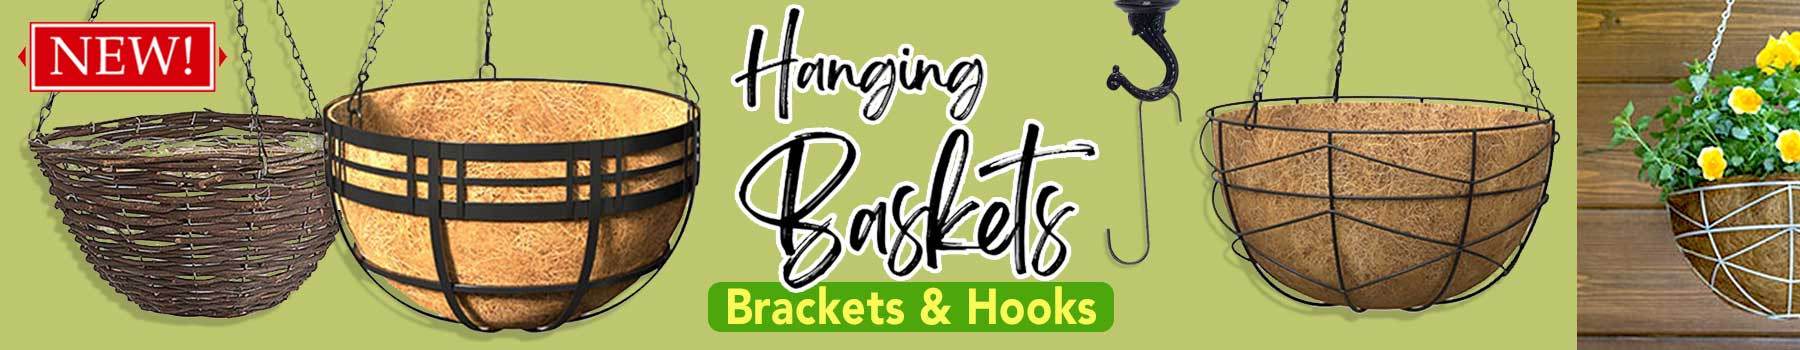 Hanging Baskets - Brackets and Hooks Wholesale